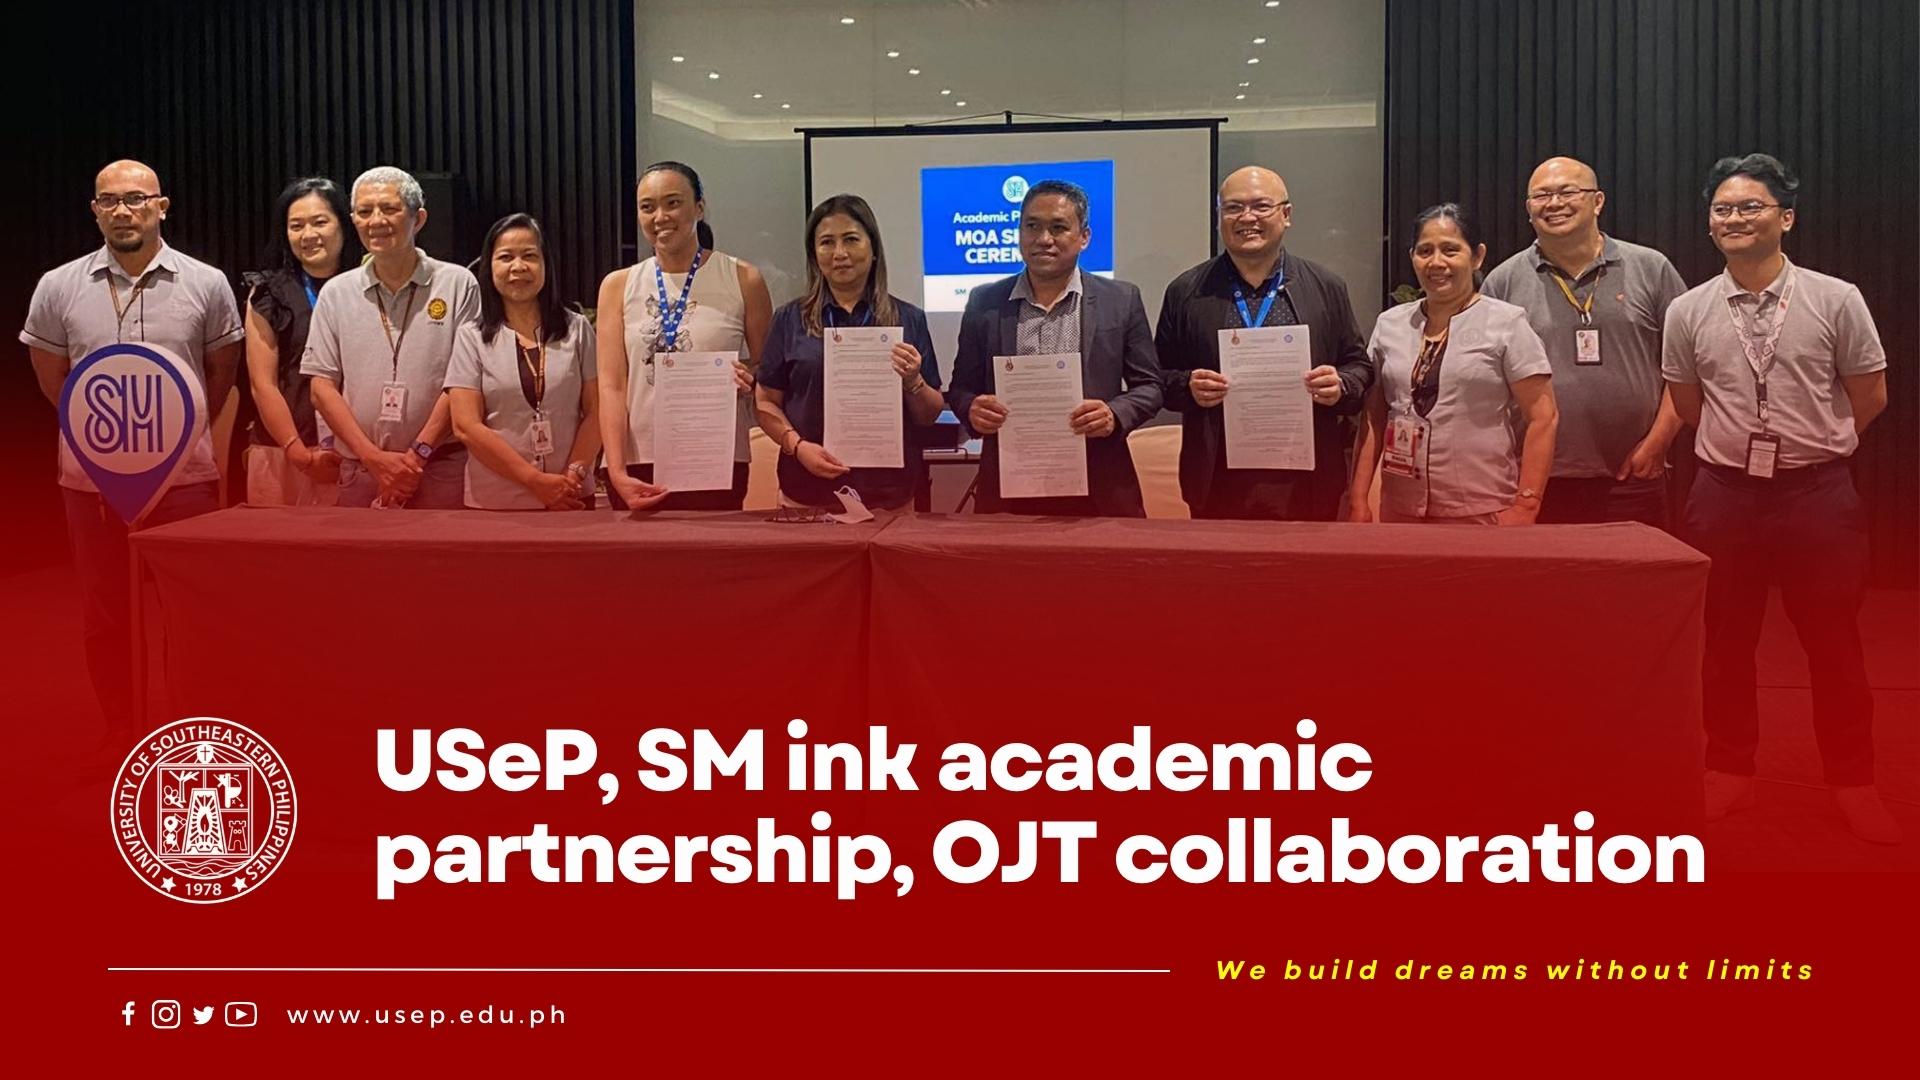 USeP, SM ink academic partnership, OJT collaboration